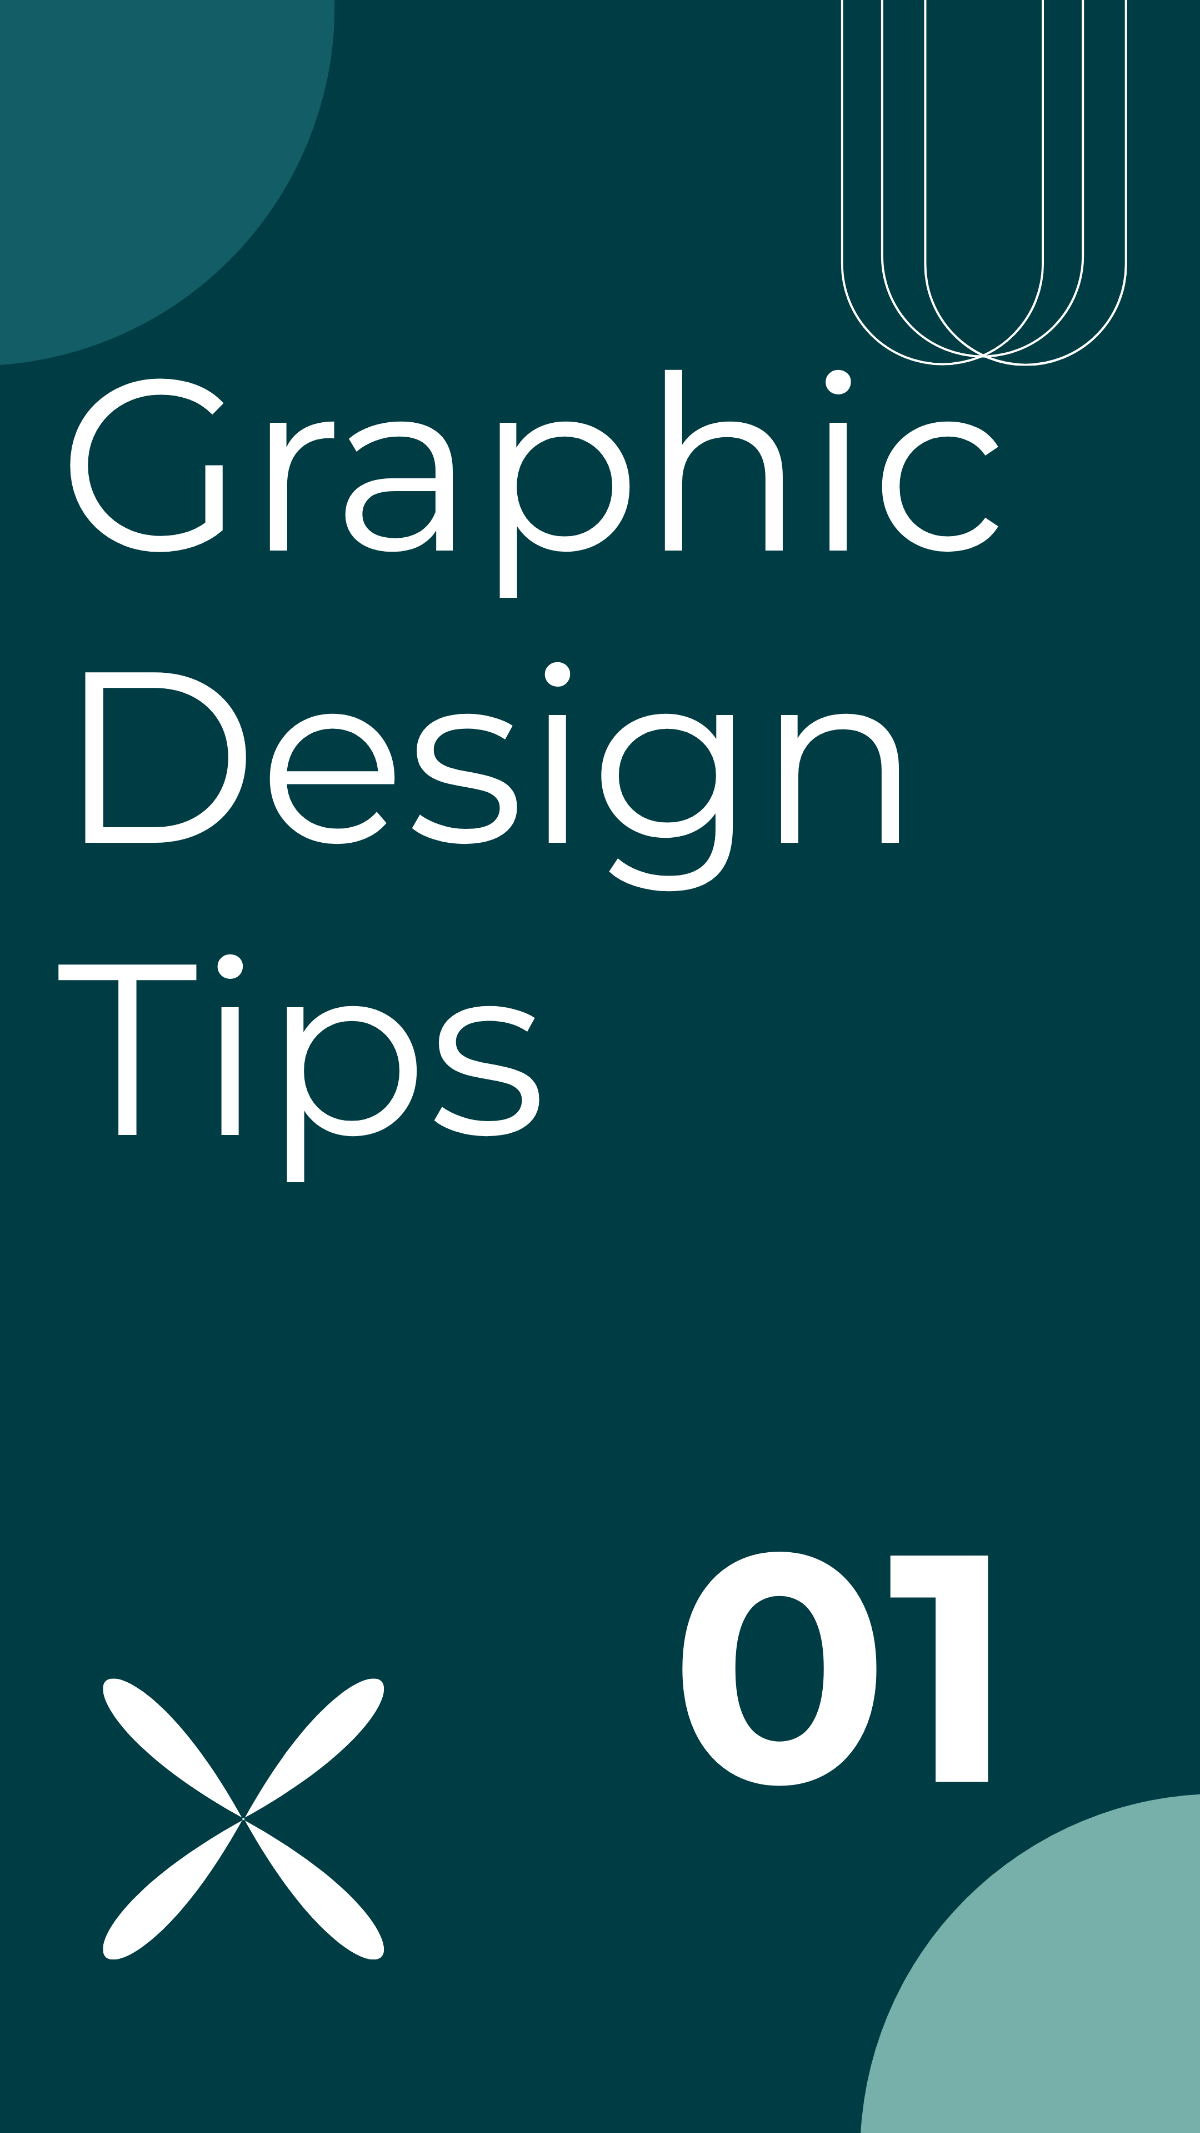 Graphic Design Tips Instagram Carousel Post